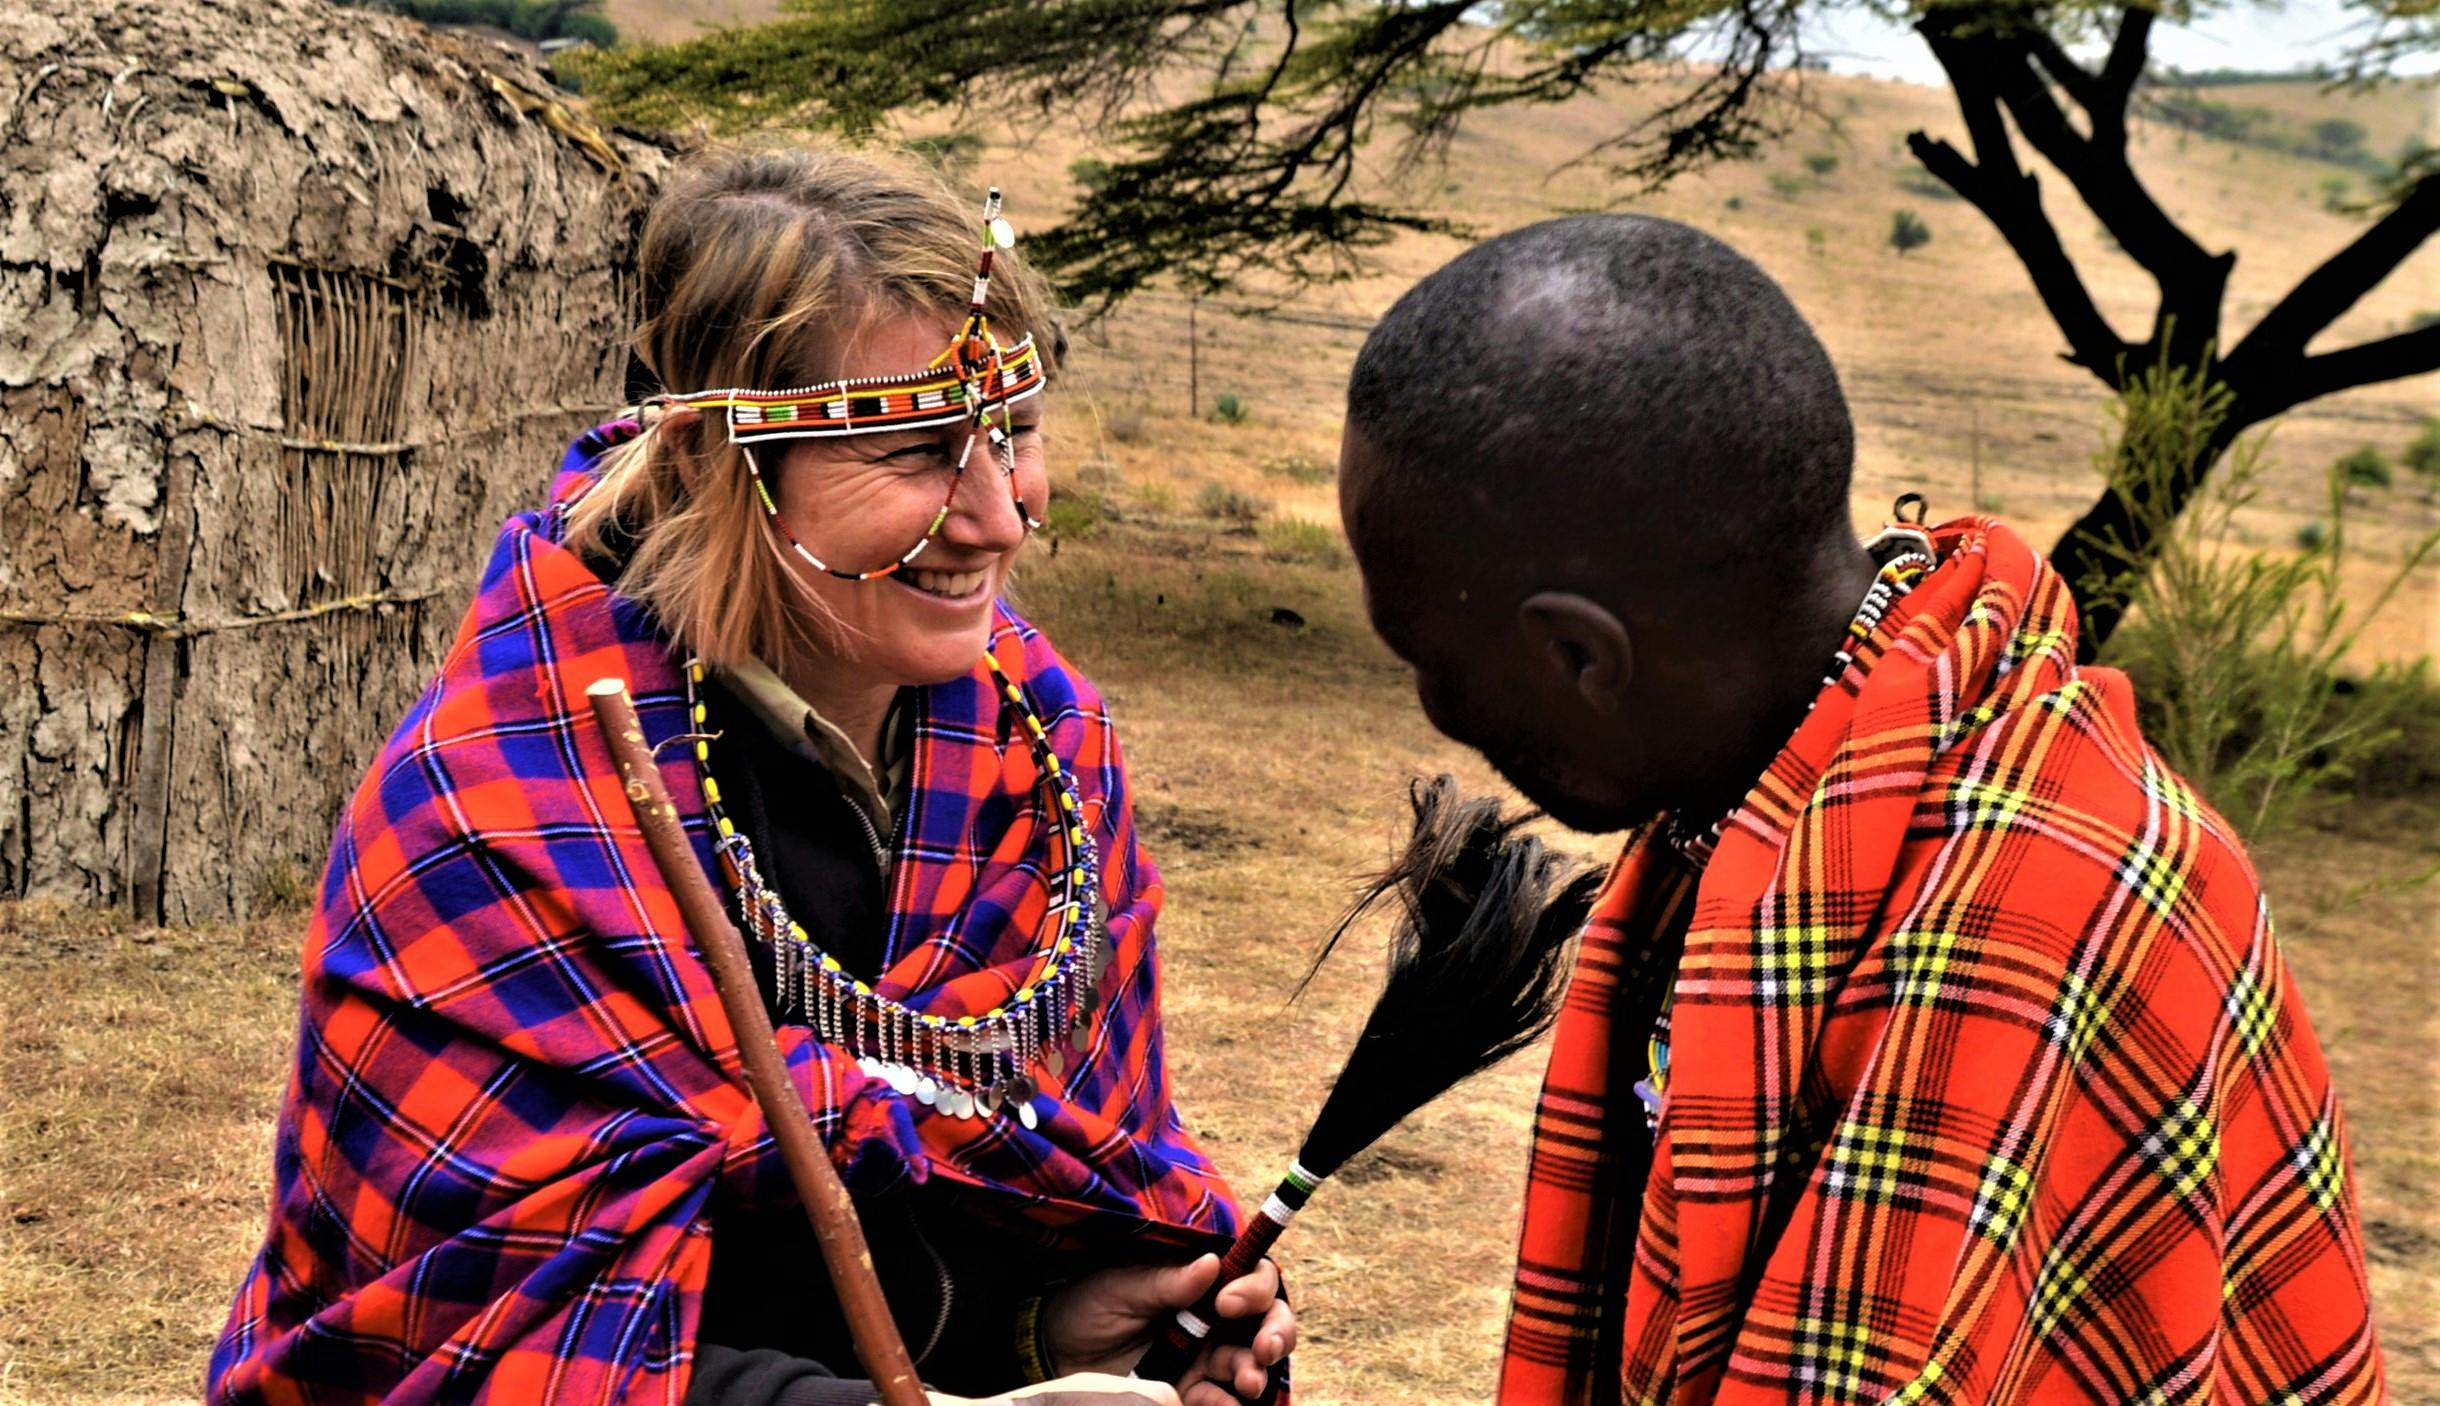 Kenyan Massai village and tribal life 2 day tour from Nairobi Musement